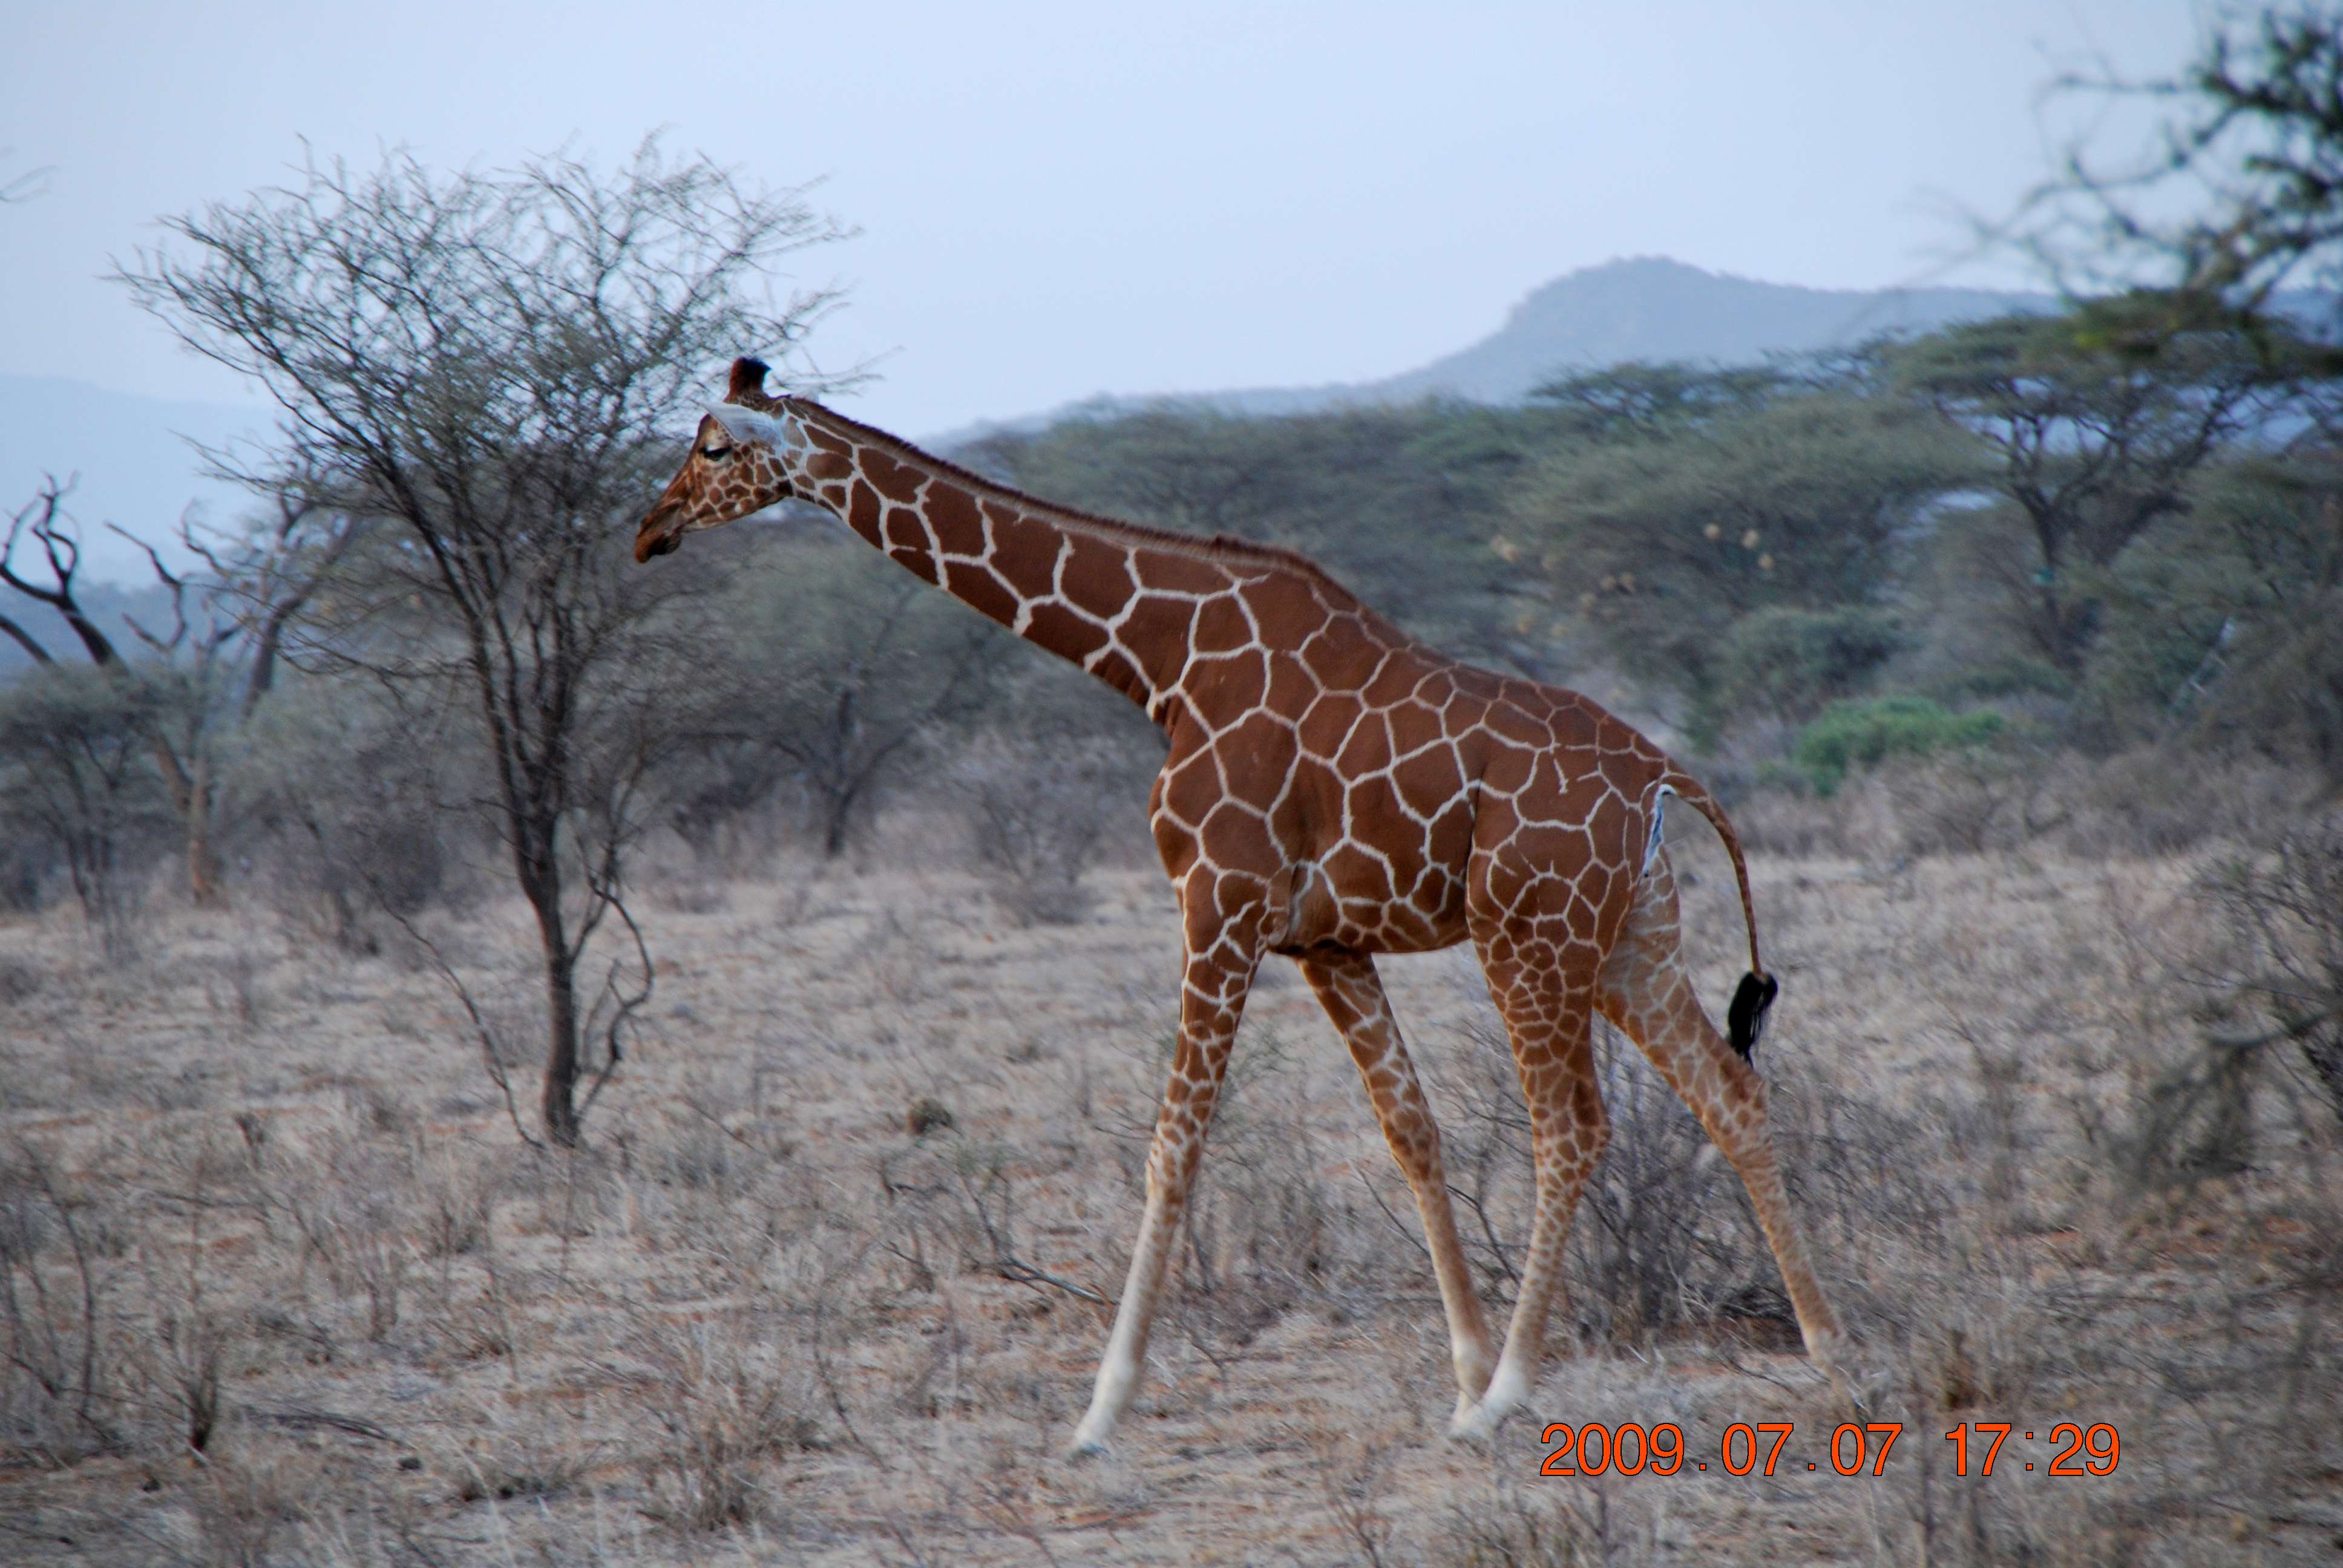 Samburu - Kenia una experiencia inolvidable (5)